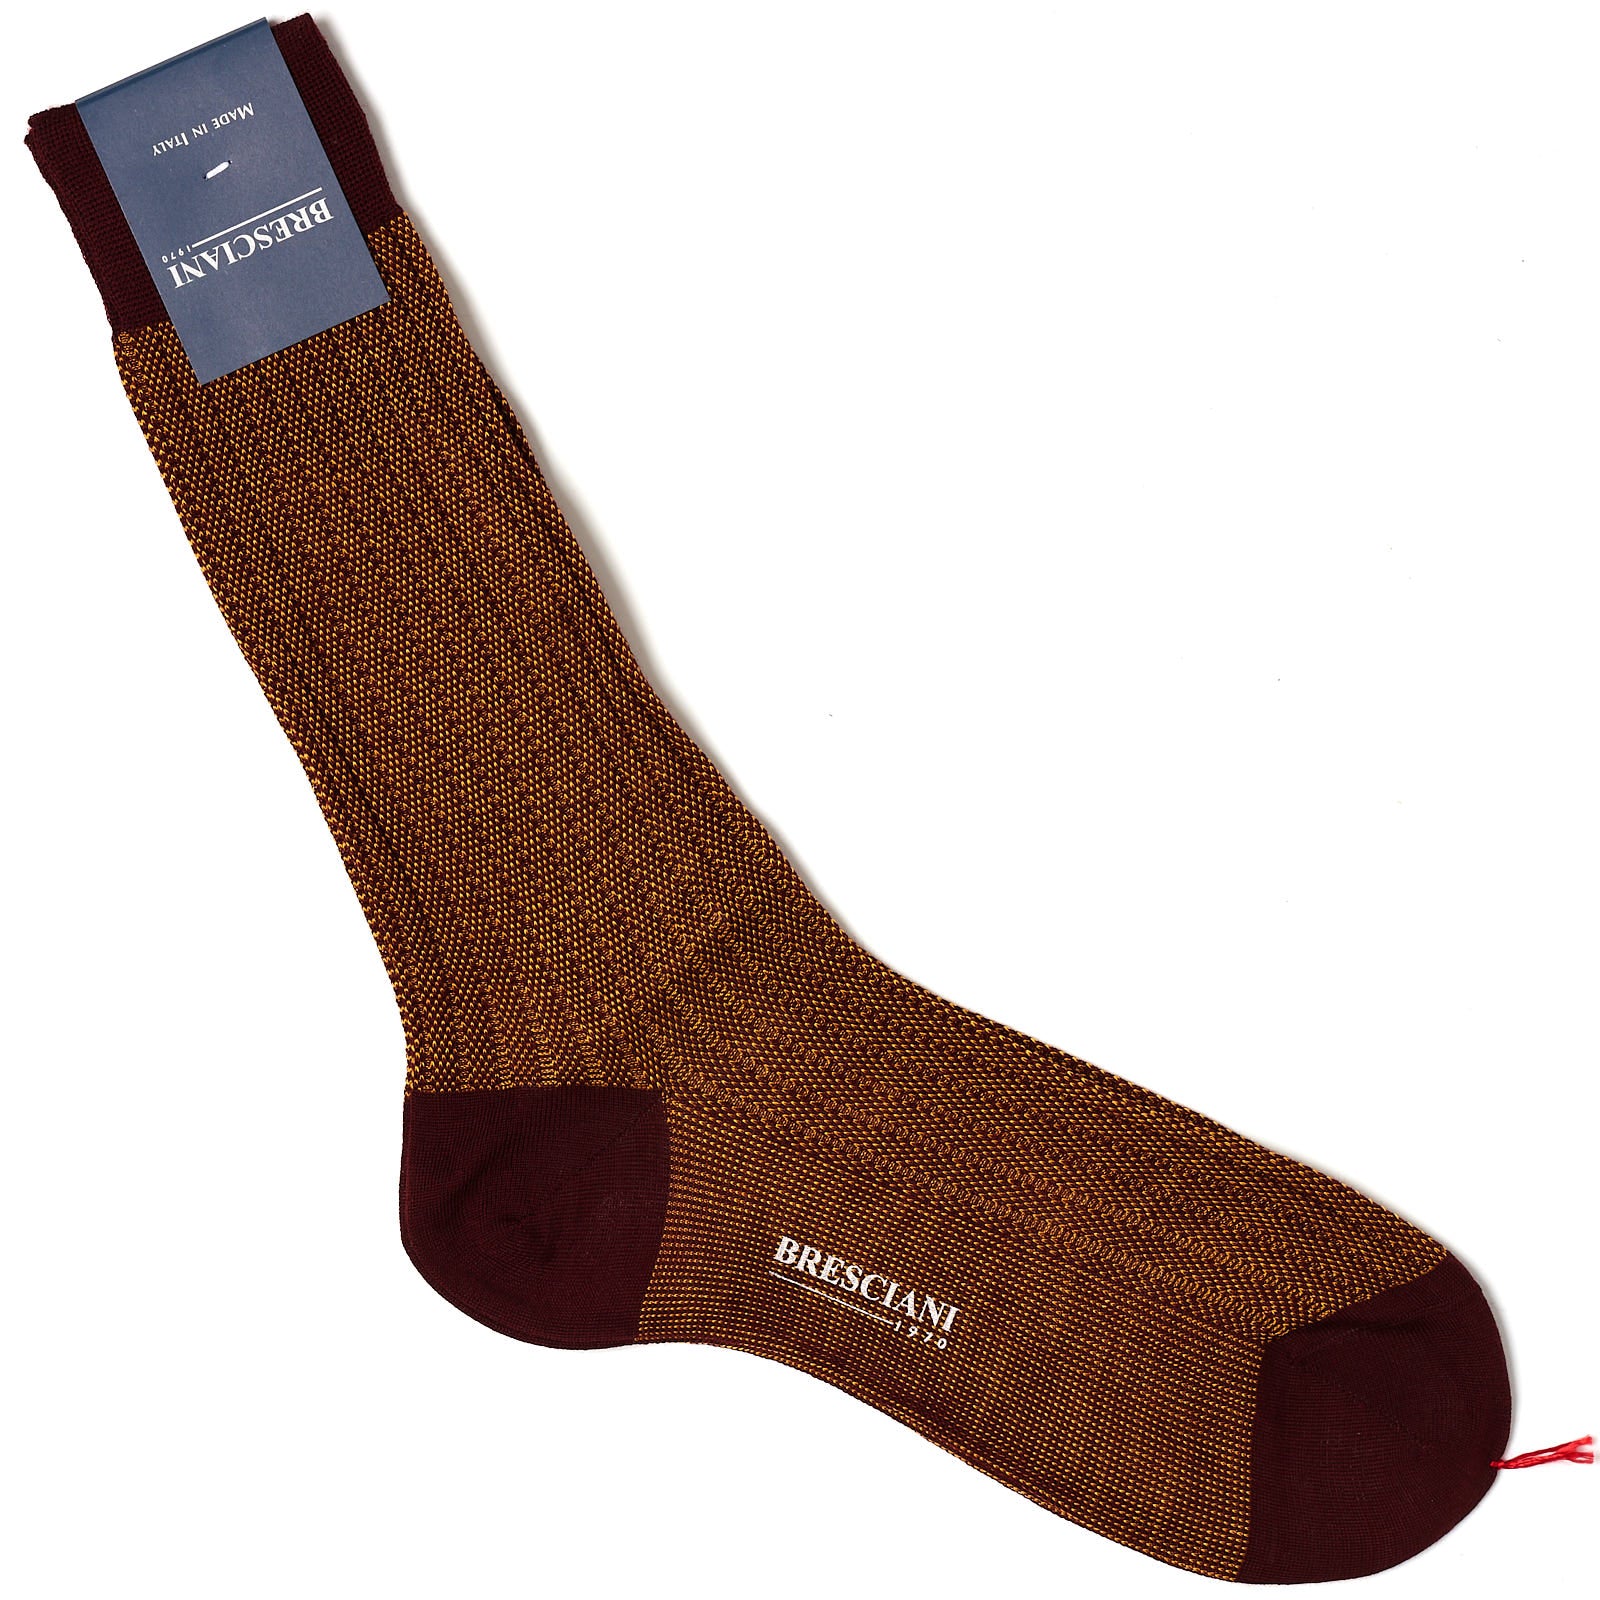 BRESCIANI Wool-Cotton Geometry Design Mid Calf Length Socks US M-L BRESCIANI